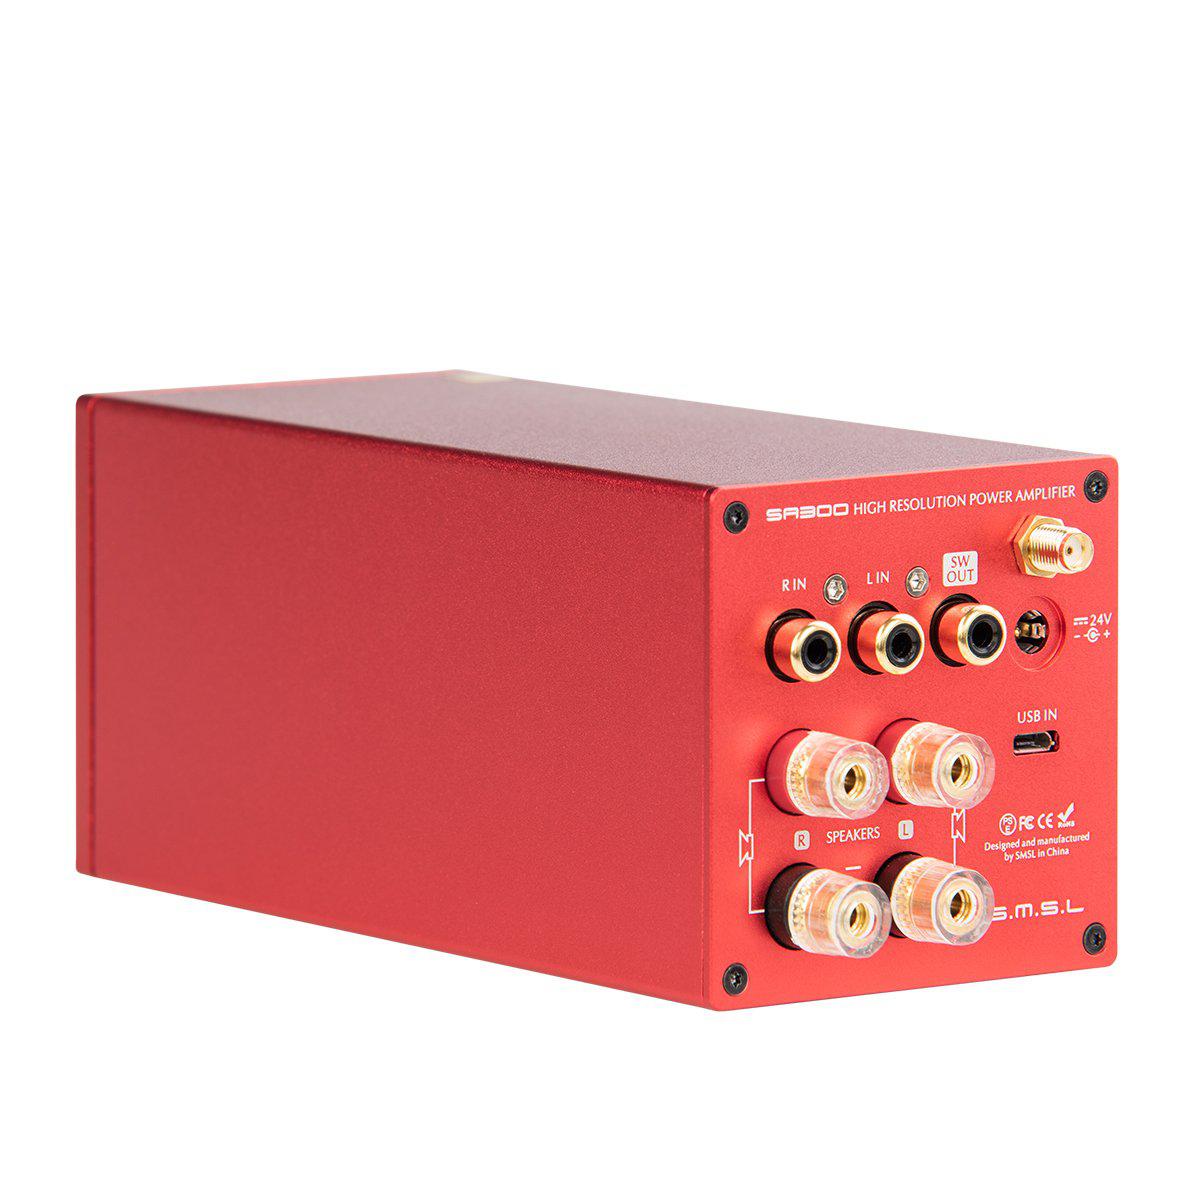 SMSL SA300 Digital Power Amplifier - Hifi-express